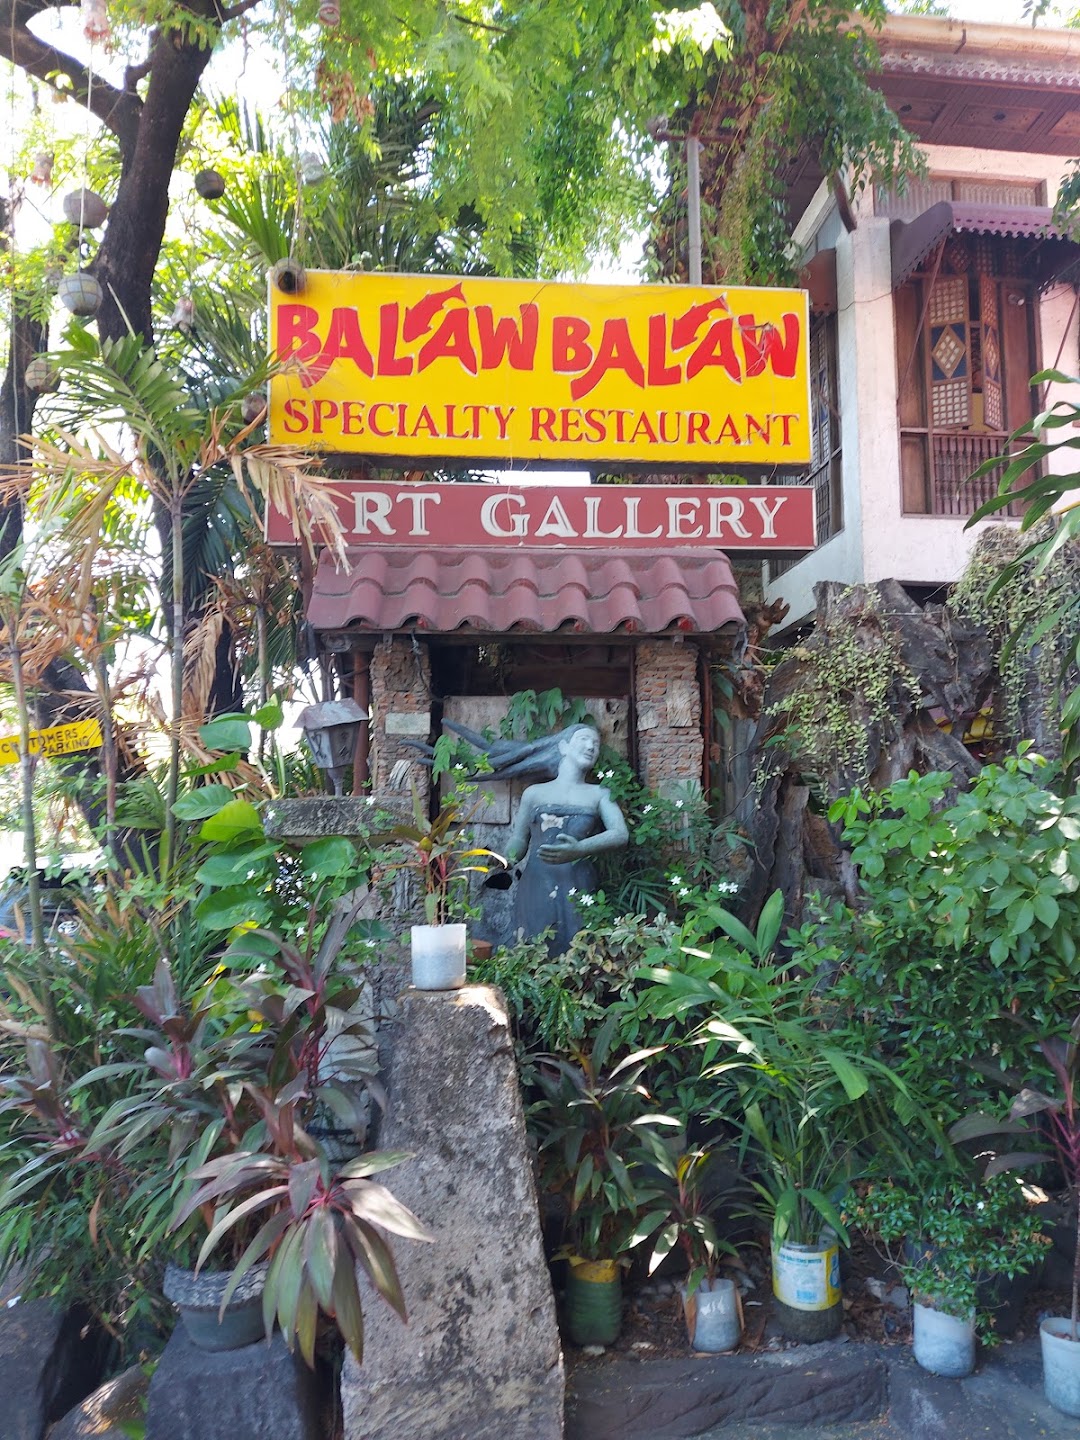 Balaw Balaw Restaurant and Art Gallery